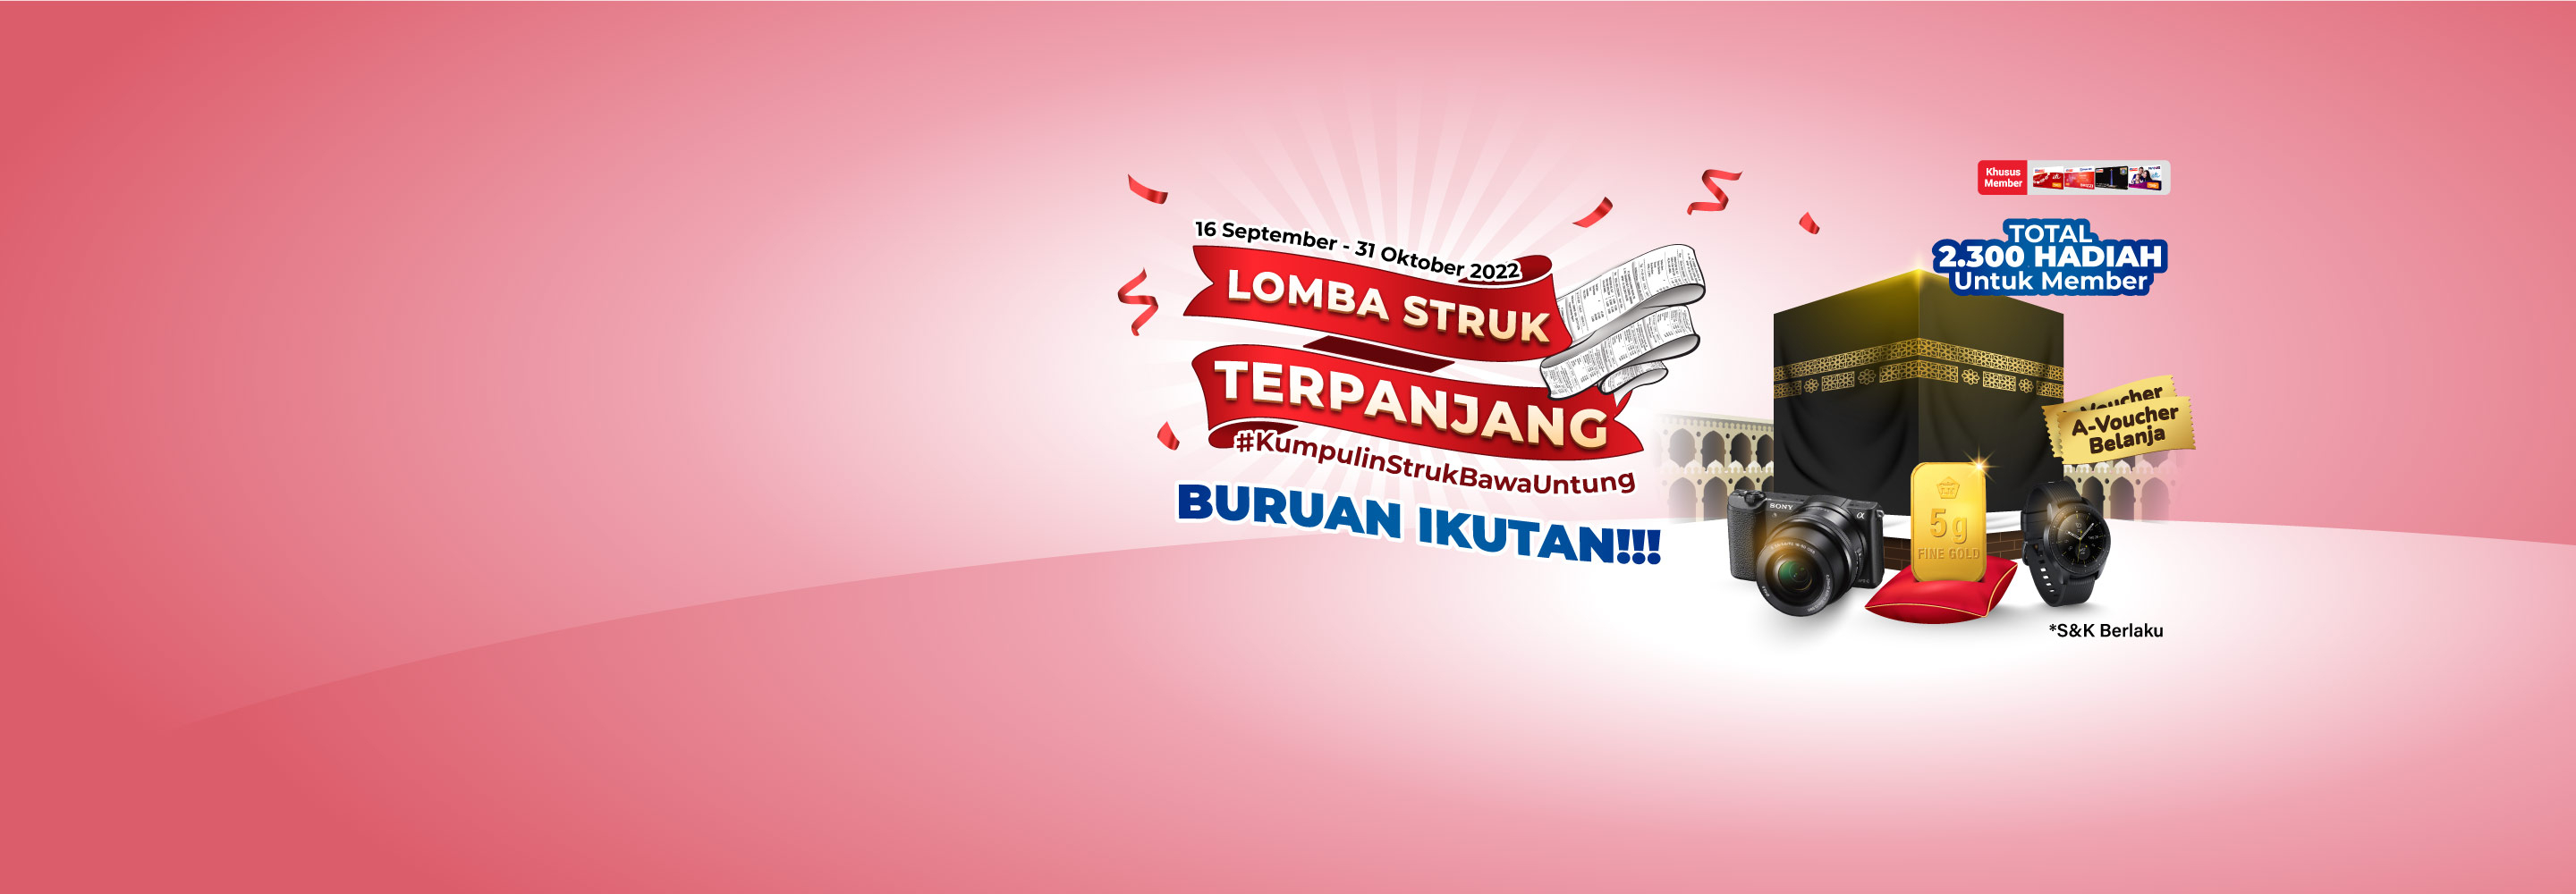 Desktop version banner Struk Terpanjang #KumpulinStrukBawaUntung